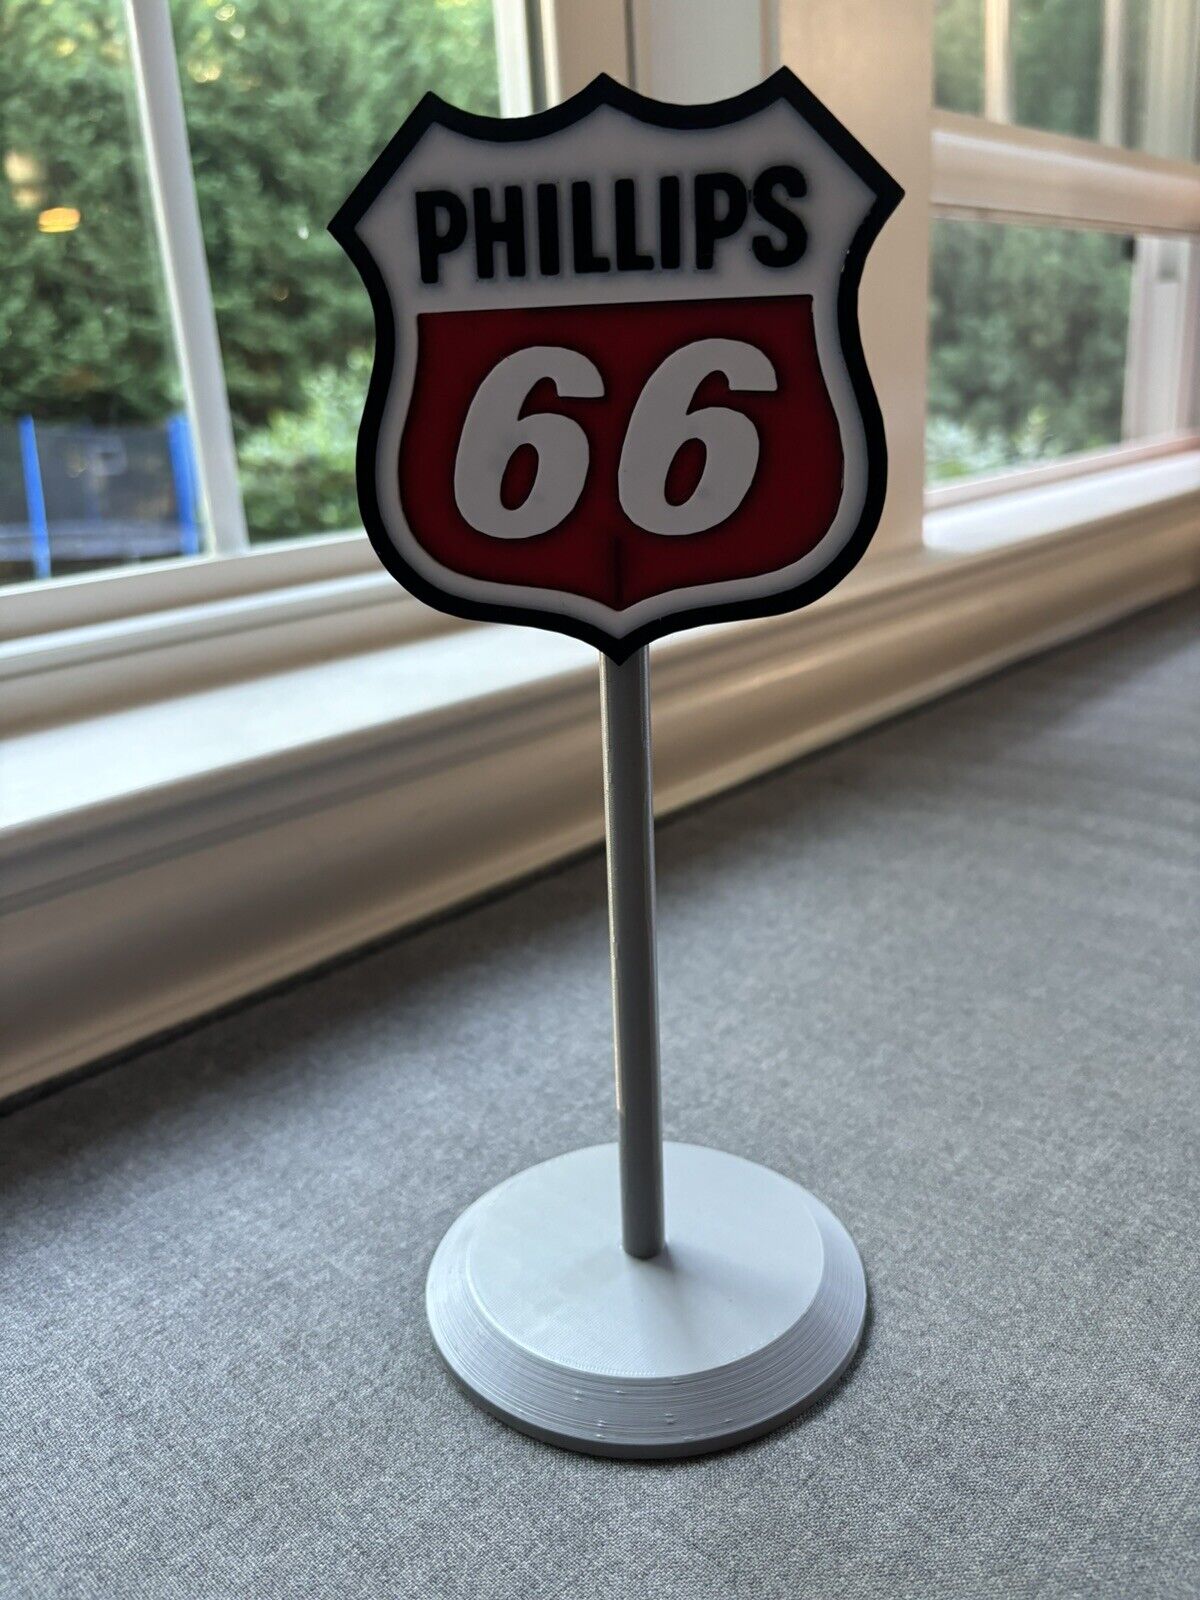 3D Printed Phillips 66 Desk/Tabletop Decorative Sign